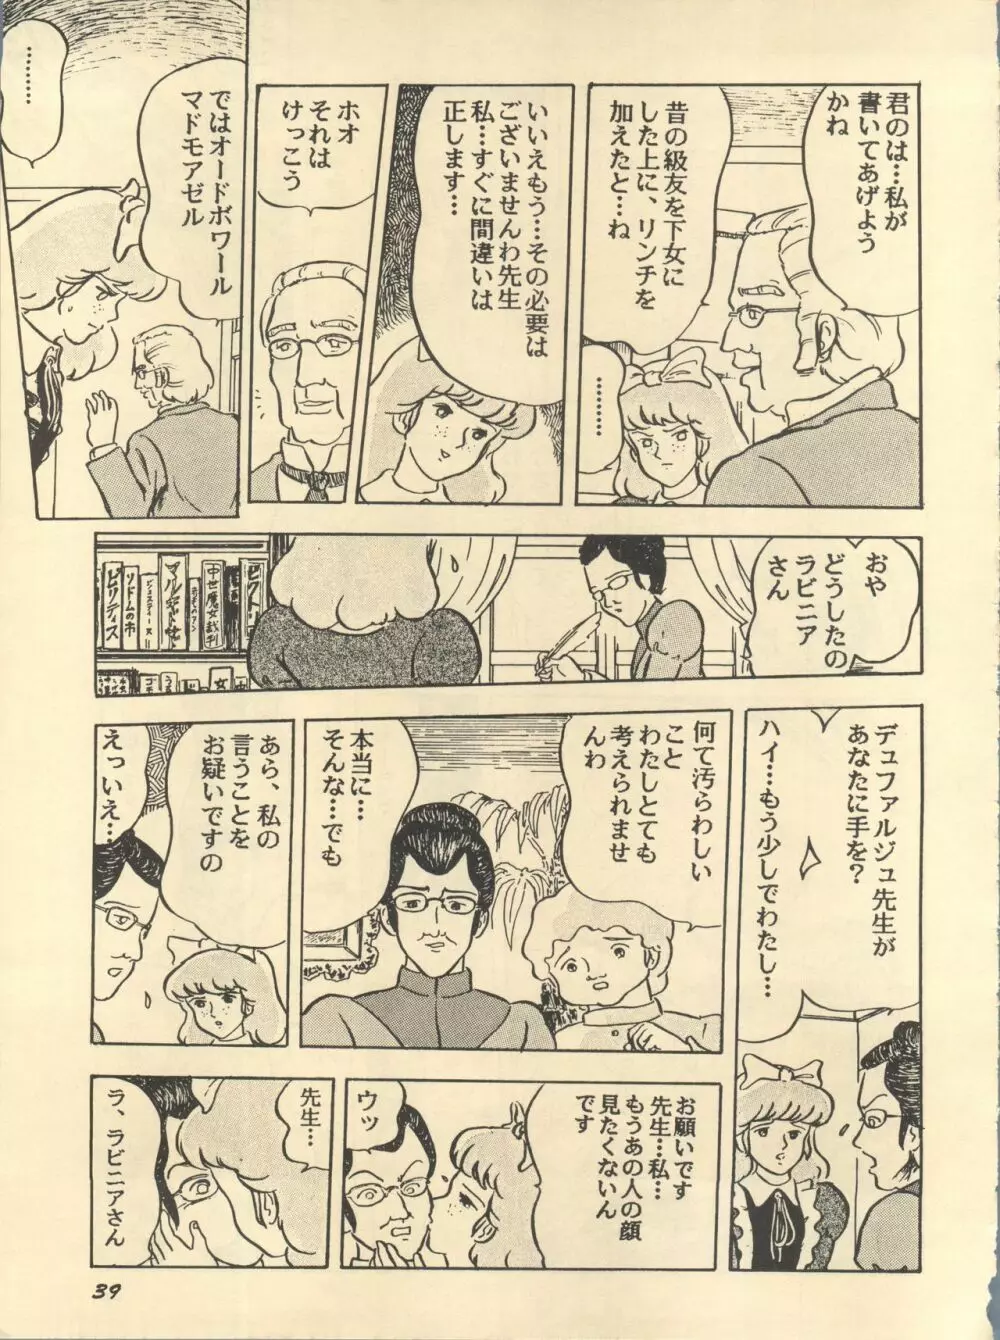 Paろでぃっく2 - page39